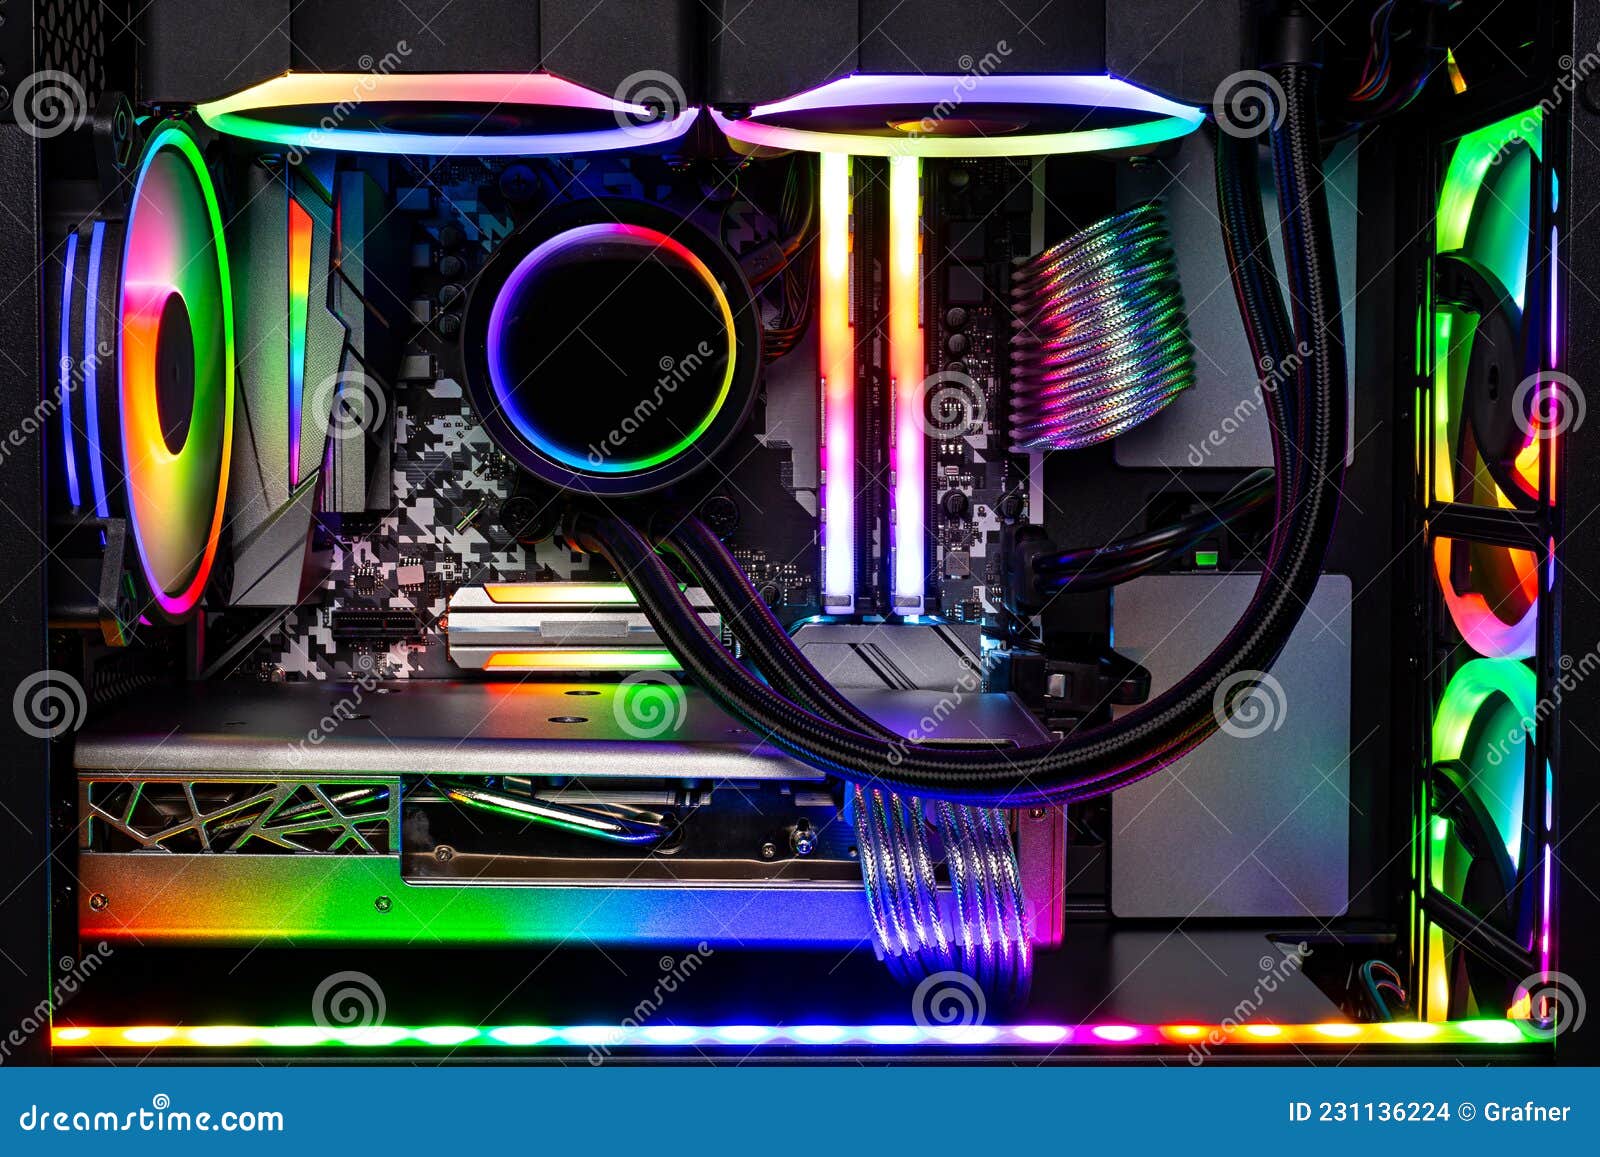 Inside View Black High End Custom Colorful Illuminated Bright Rainbow RGB  LED Gaming Pc. Computer Power Hardware and Technology Stock Photo - Image  of illuminated, electronic: 231136224